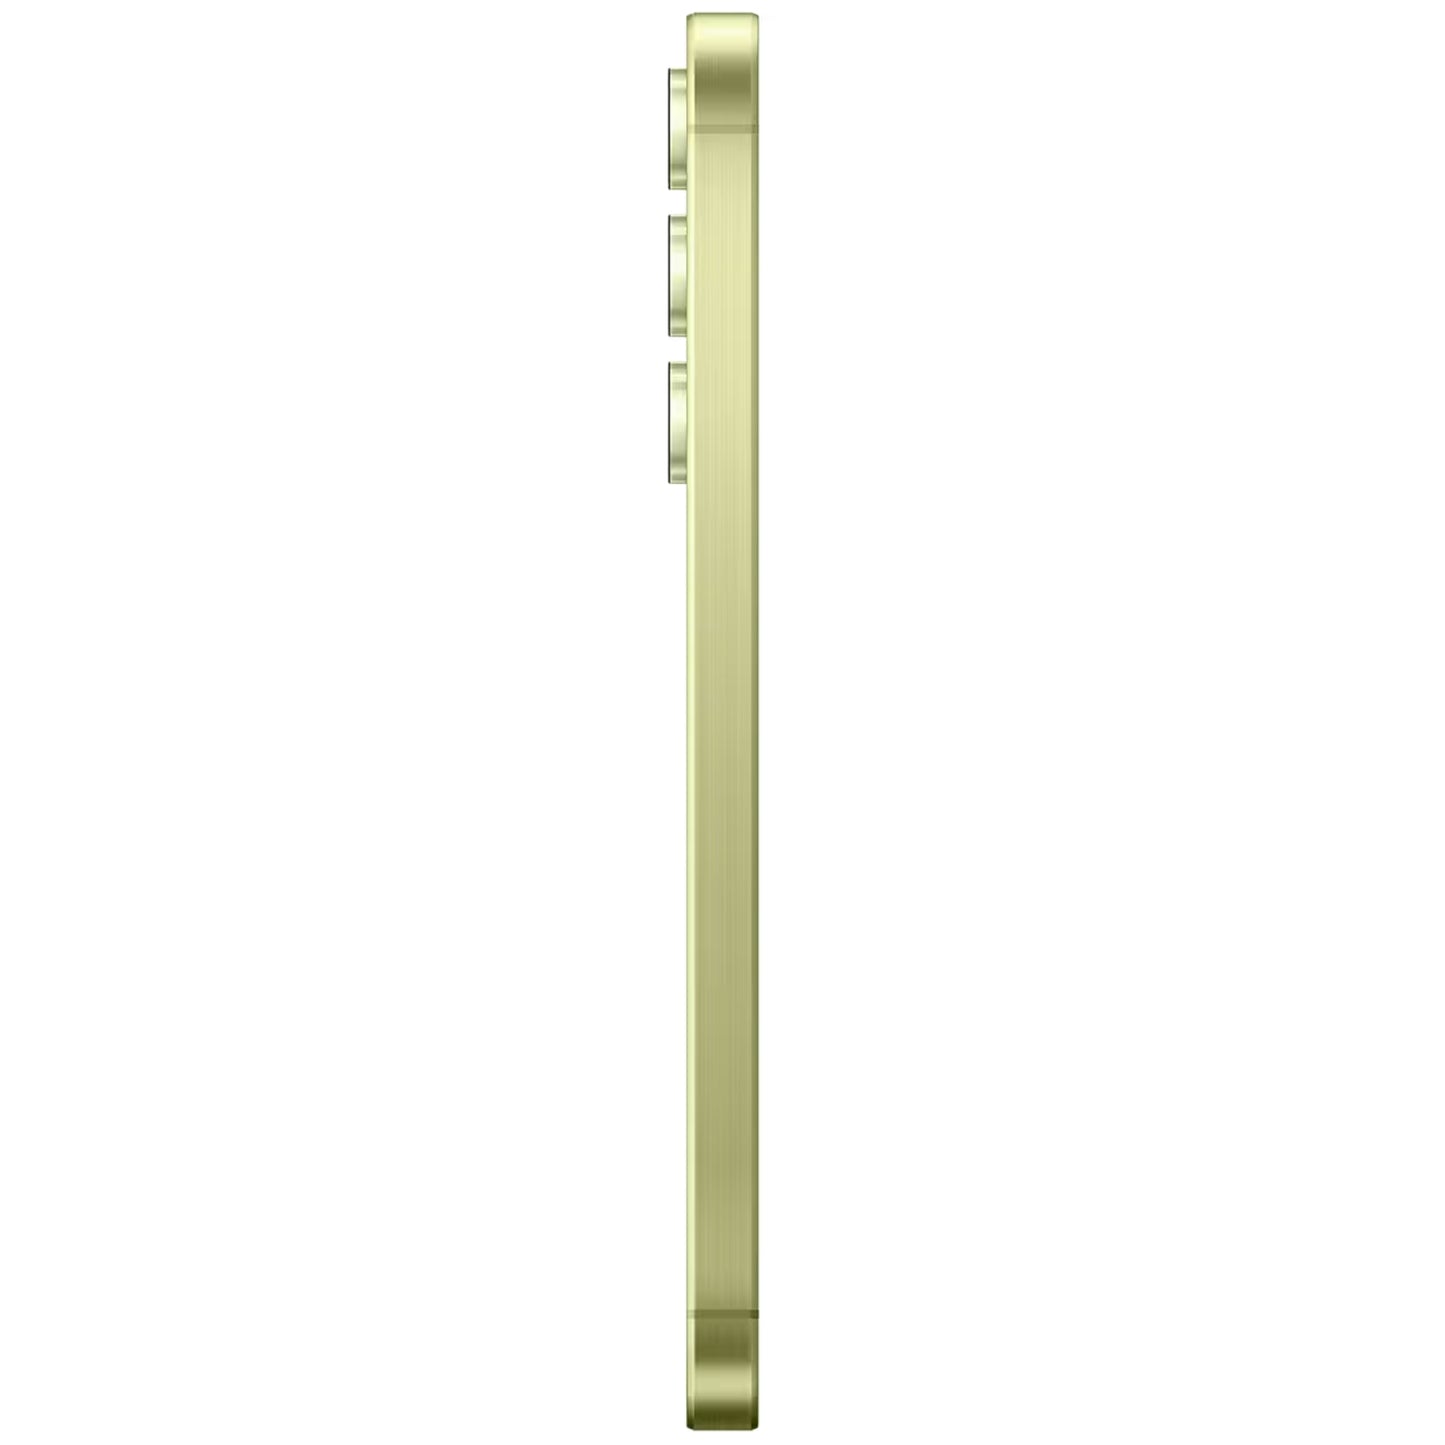 Samsung Galaxy A55 Dual nano sim A5560 5G (8G ram) - MyMobile